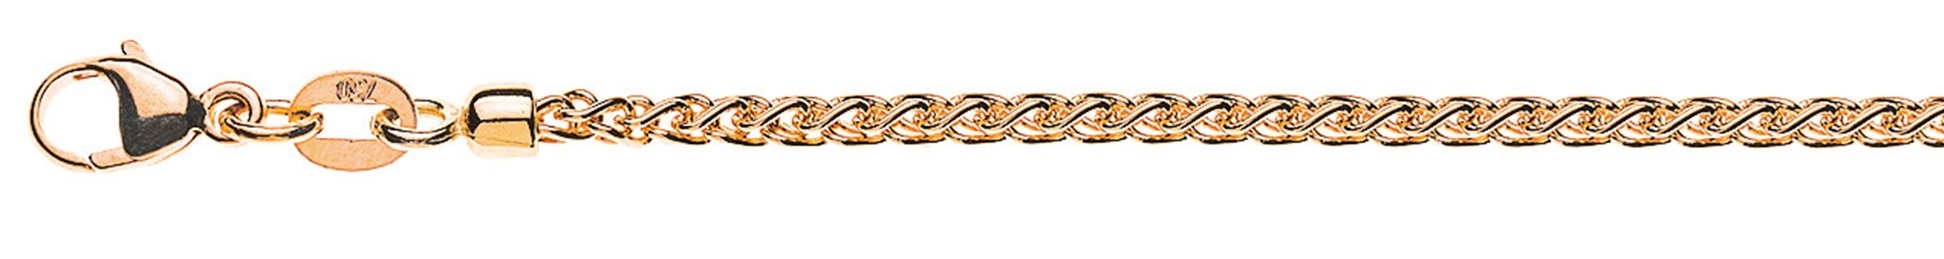 AURONOS Prestige Collier chaîne en or rose 18K 60cm 2.15mm